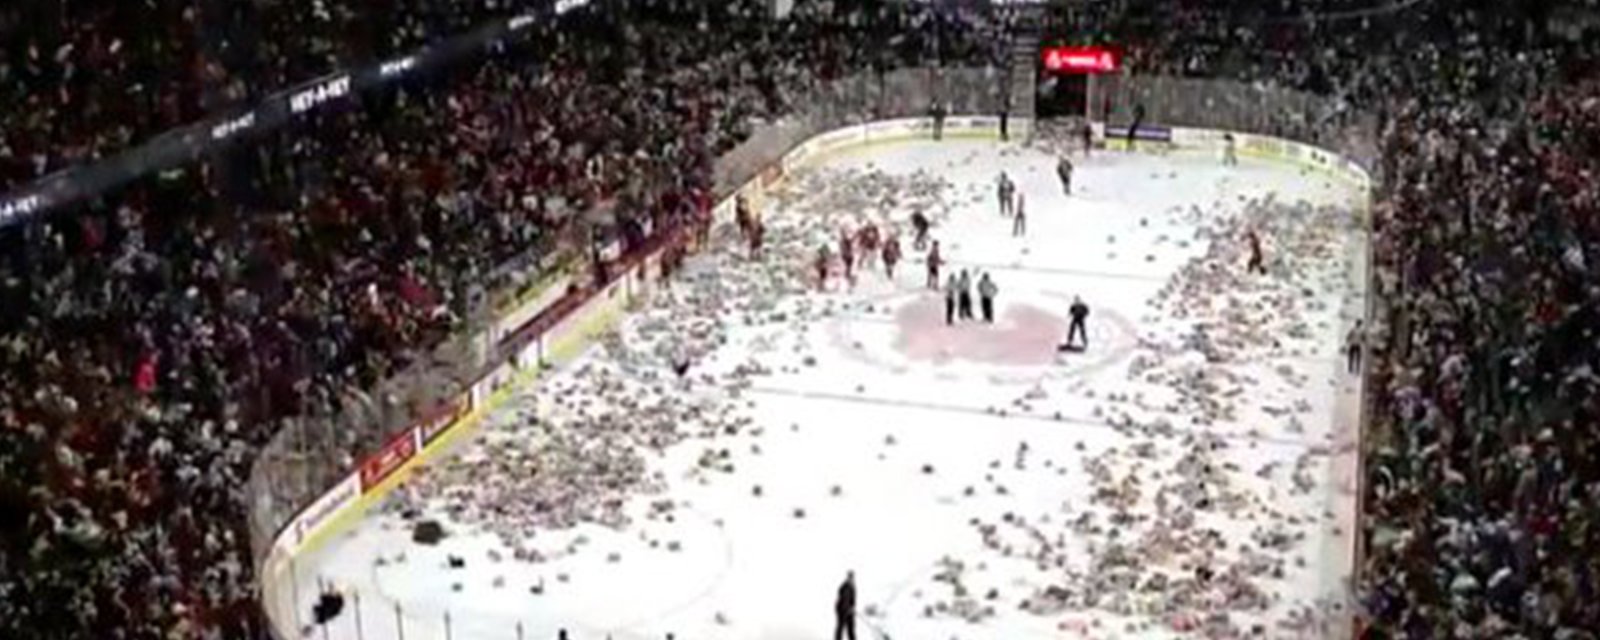 Watch 24,605 teddy bears hit the ice in Calgary!